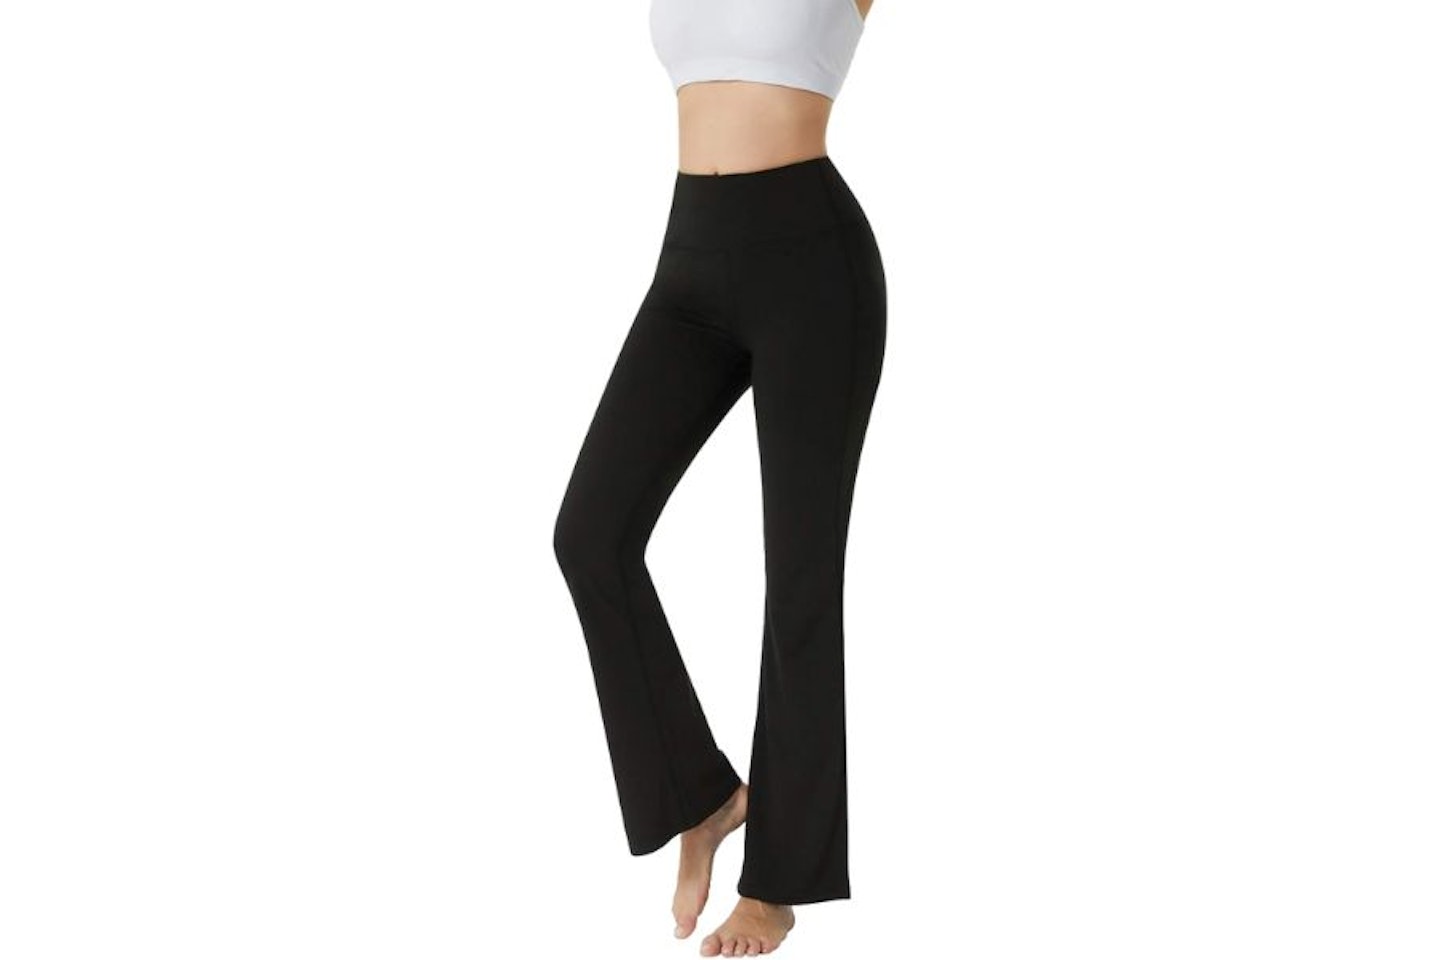  VANTONIA High Waisted Yoga Pants No Front Seam Workout